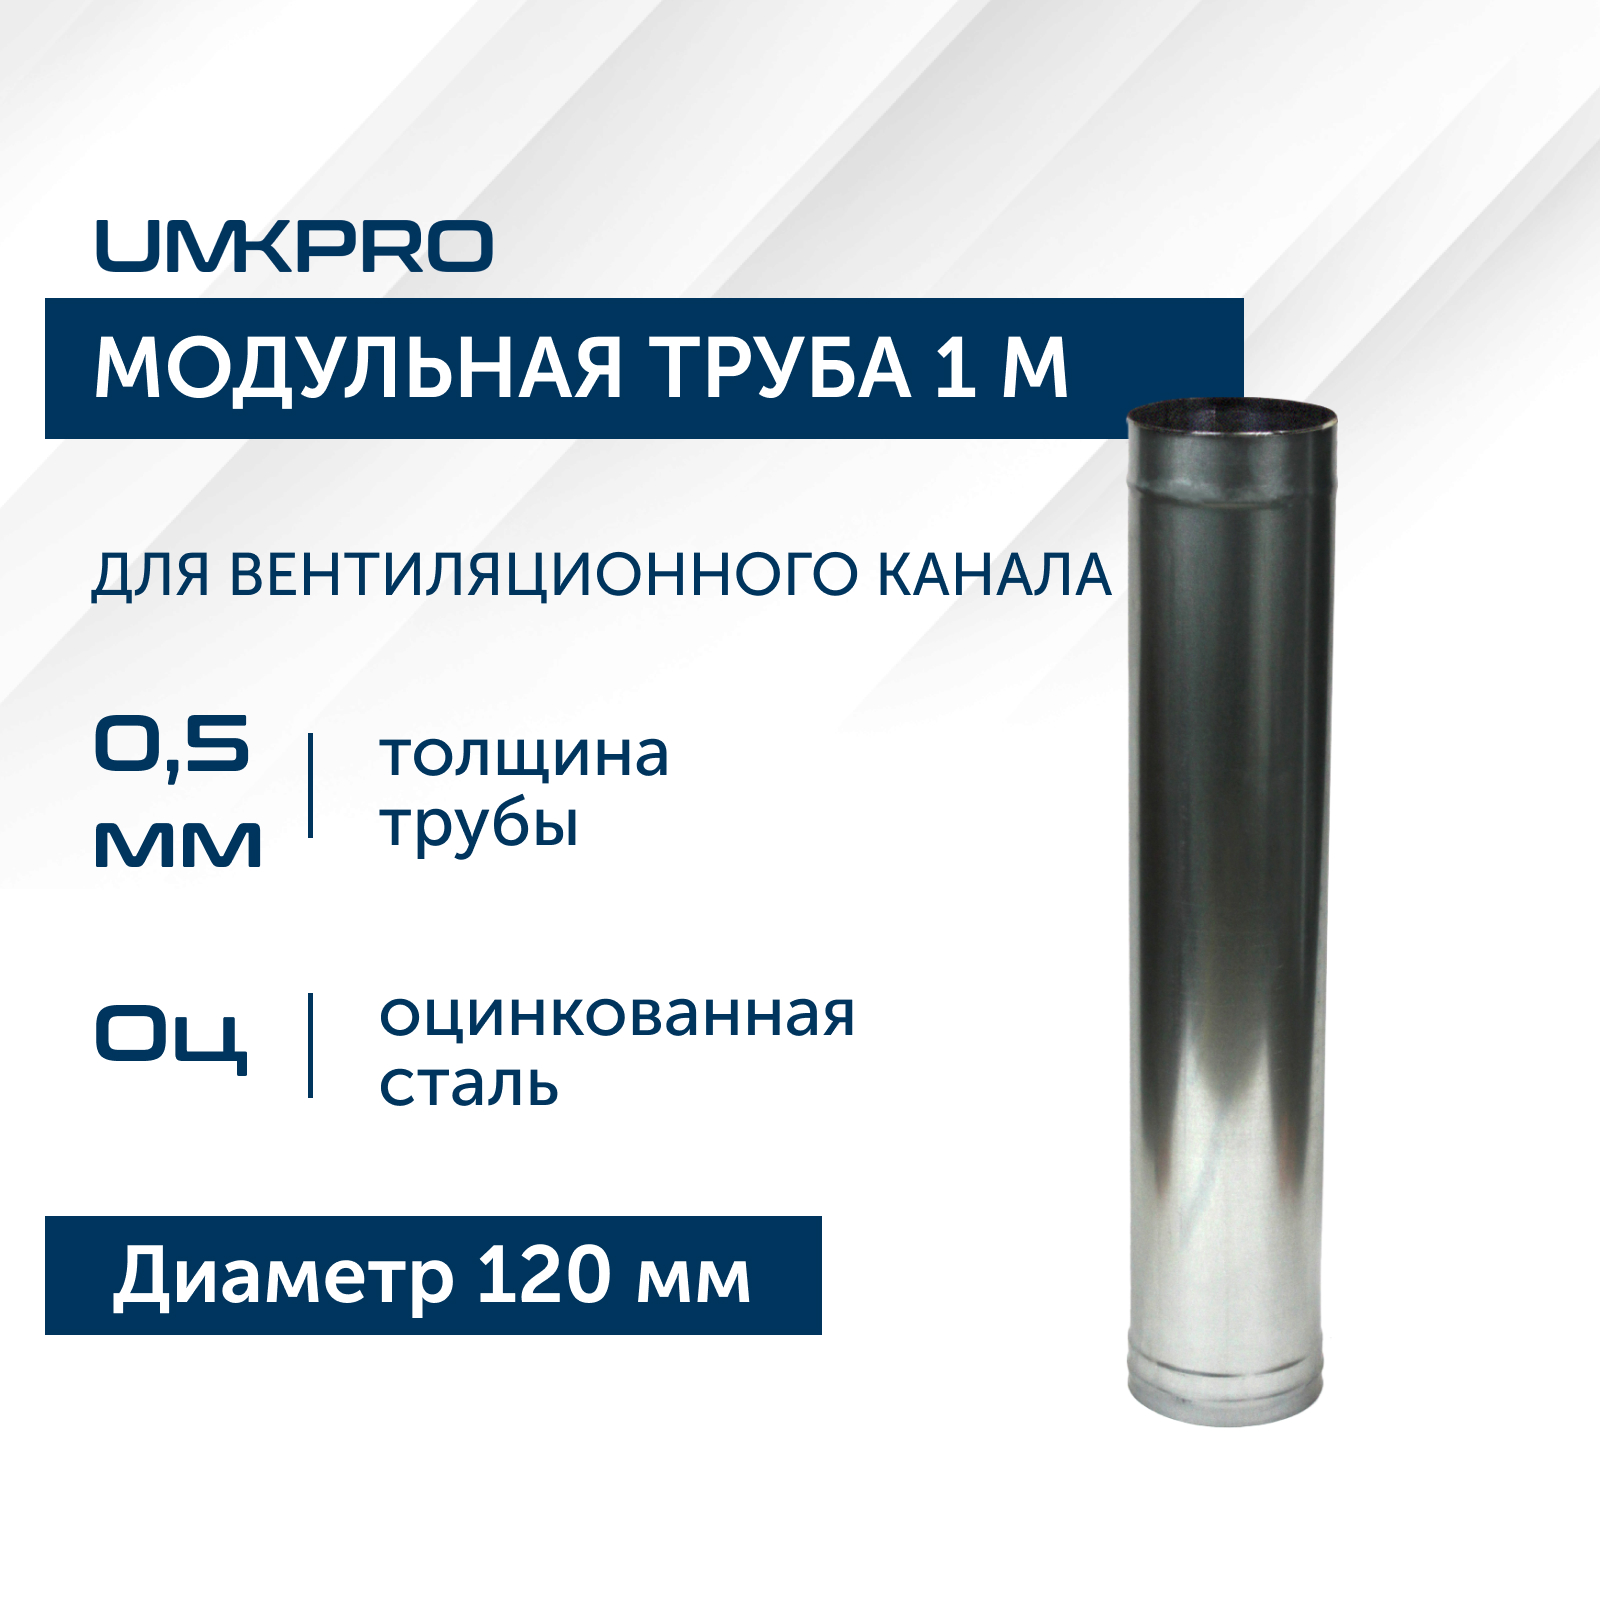 Труба модульная для дымохода 1 м UMKPRO D 120, Оц/0,5мм